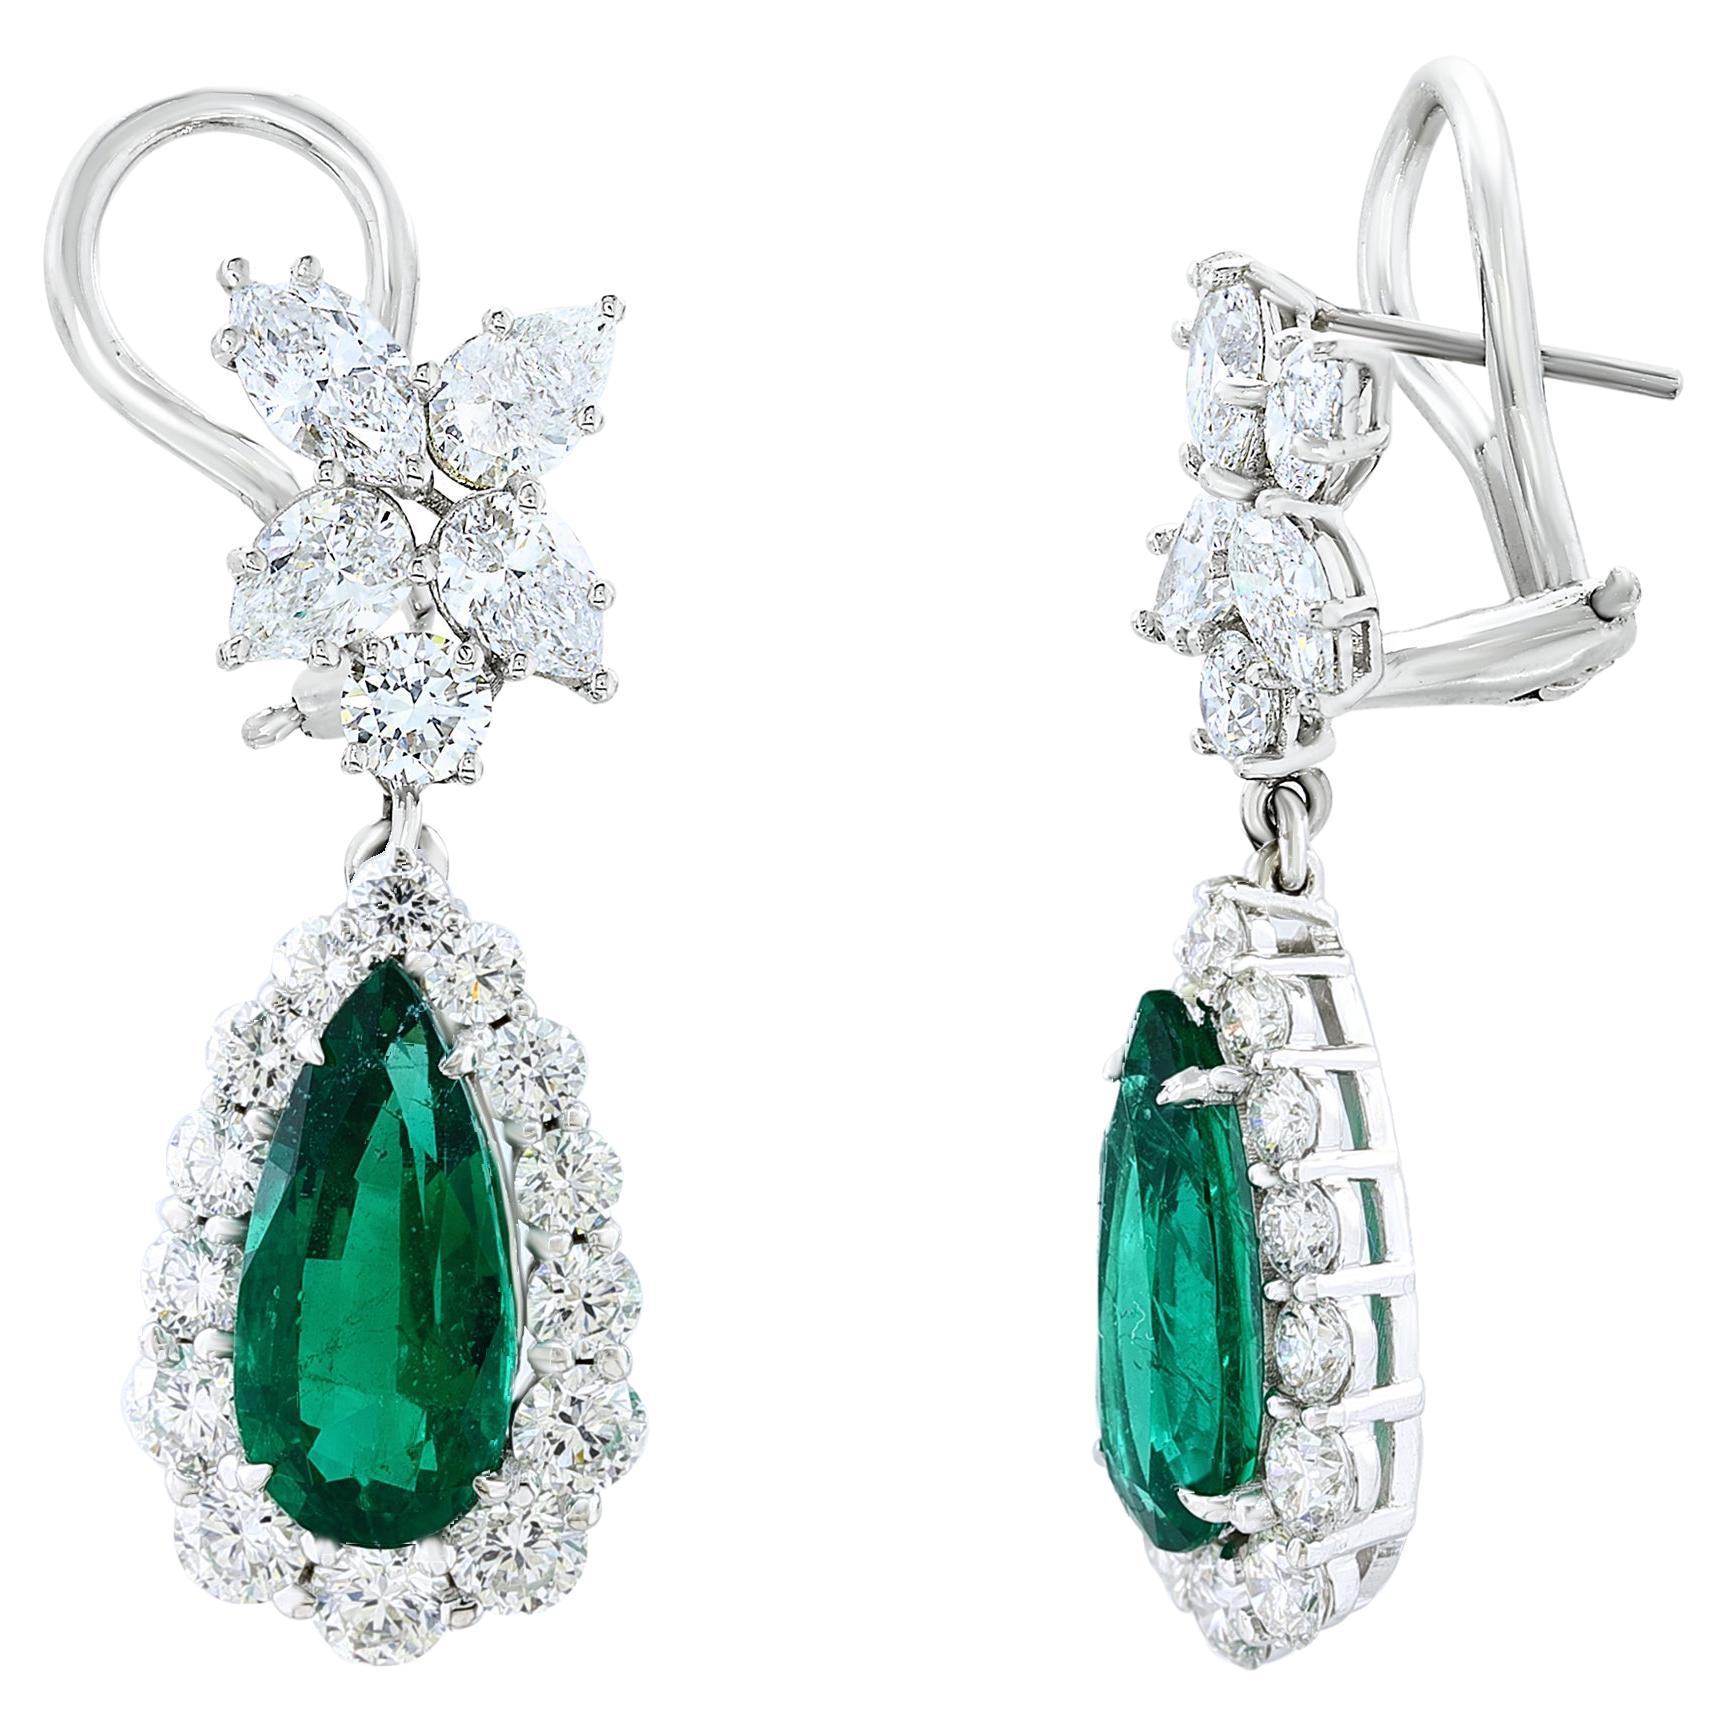 4.80 Carat Pear Shape Emerald and Diamond Drop Earrings in 18K White Gold